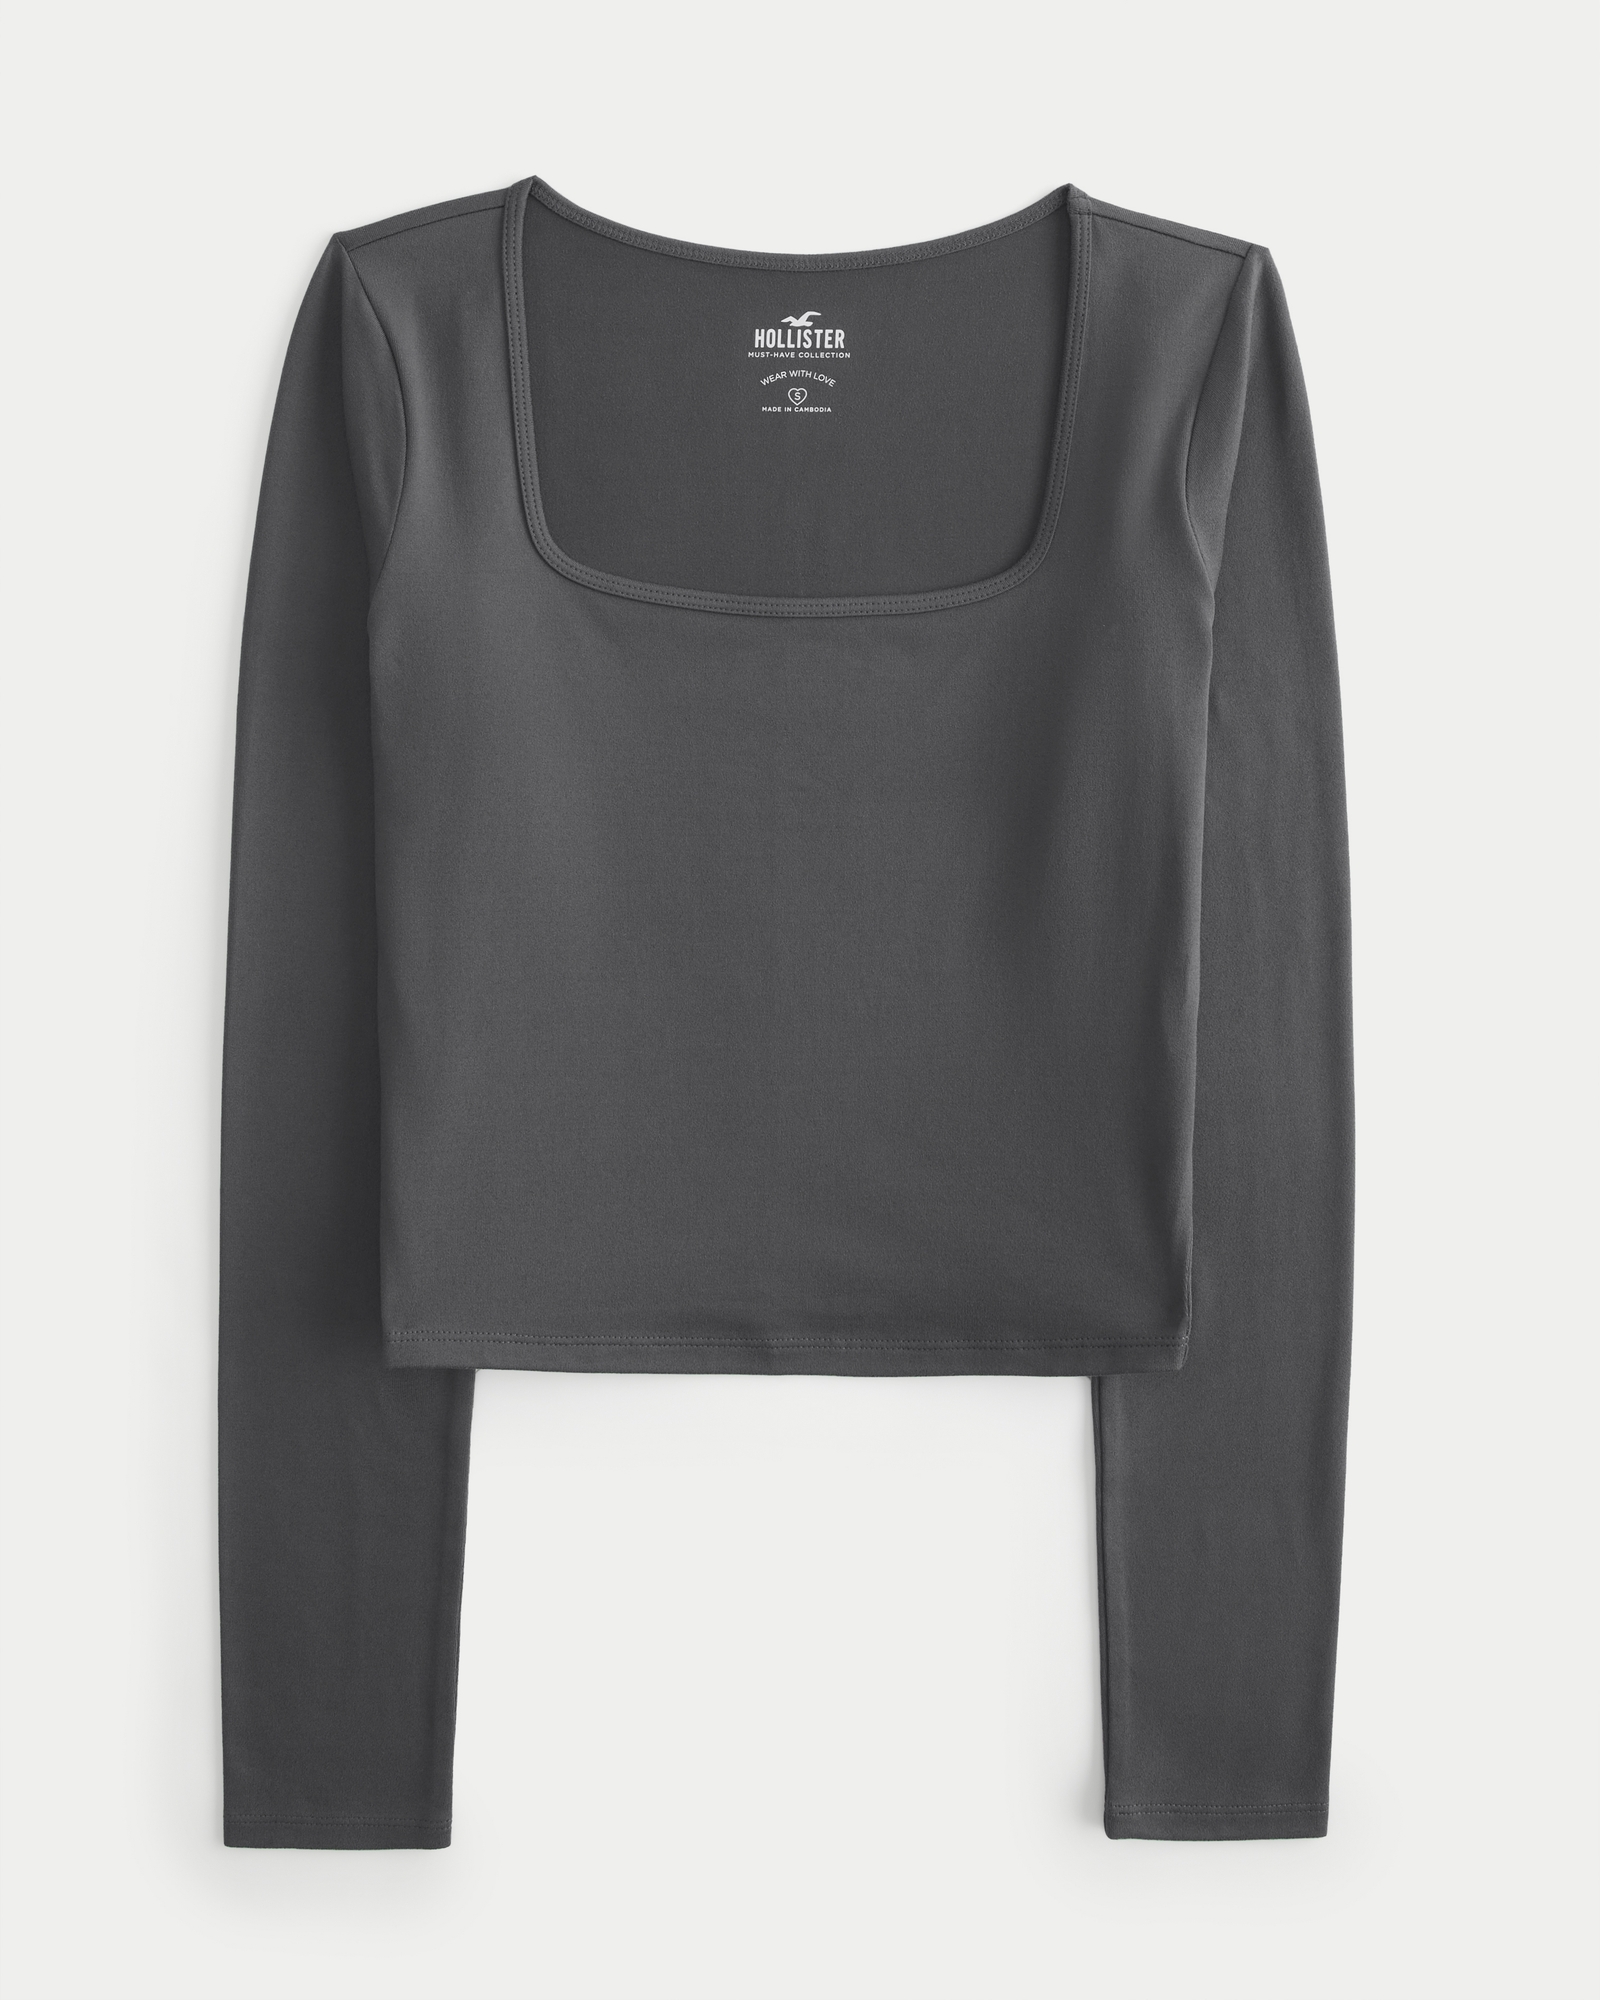 black Hollister t shirt super stretchy fabric - Depop